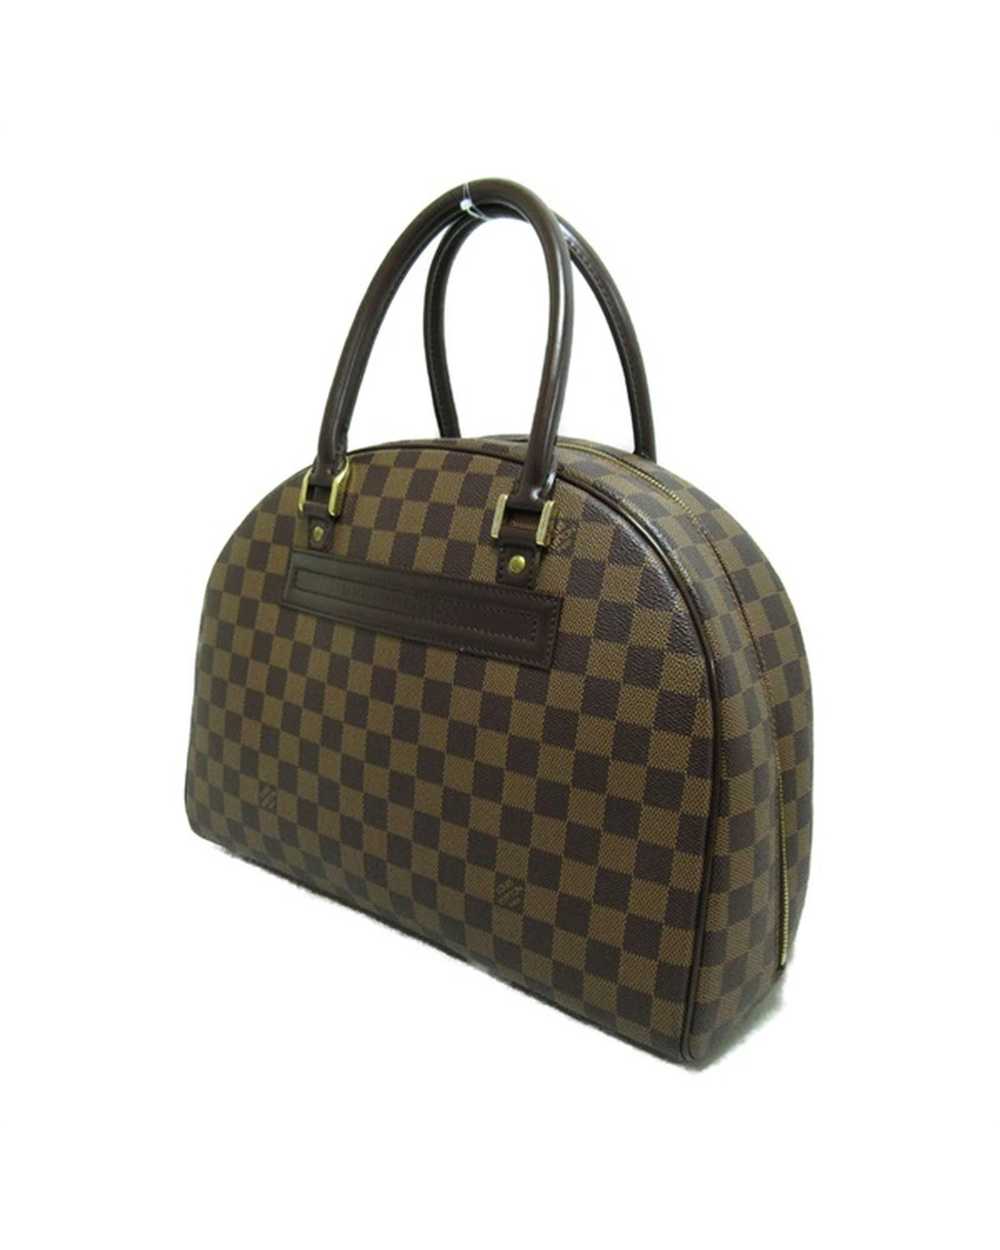 Louis Vuitton Designer Damier Ebene Bag in Excell… - image 3